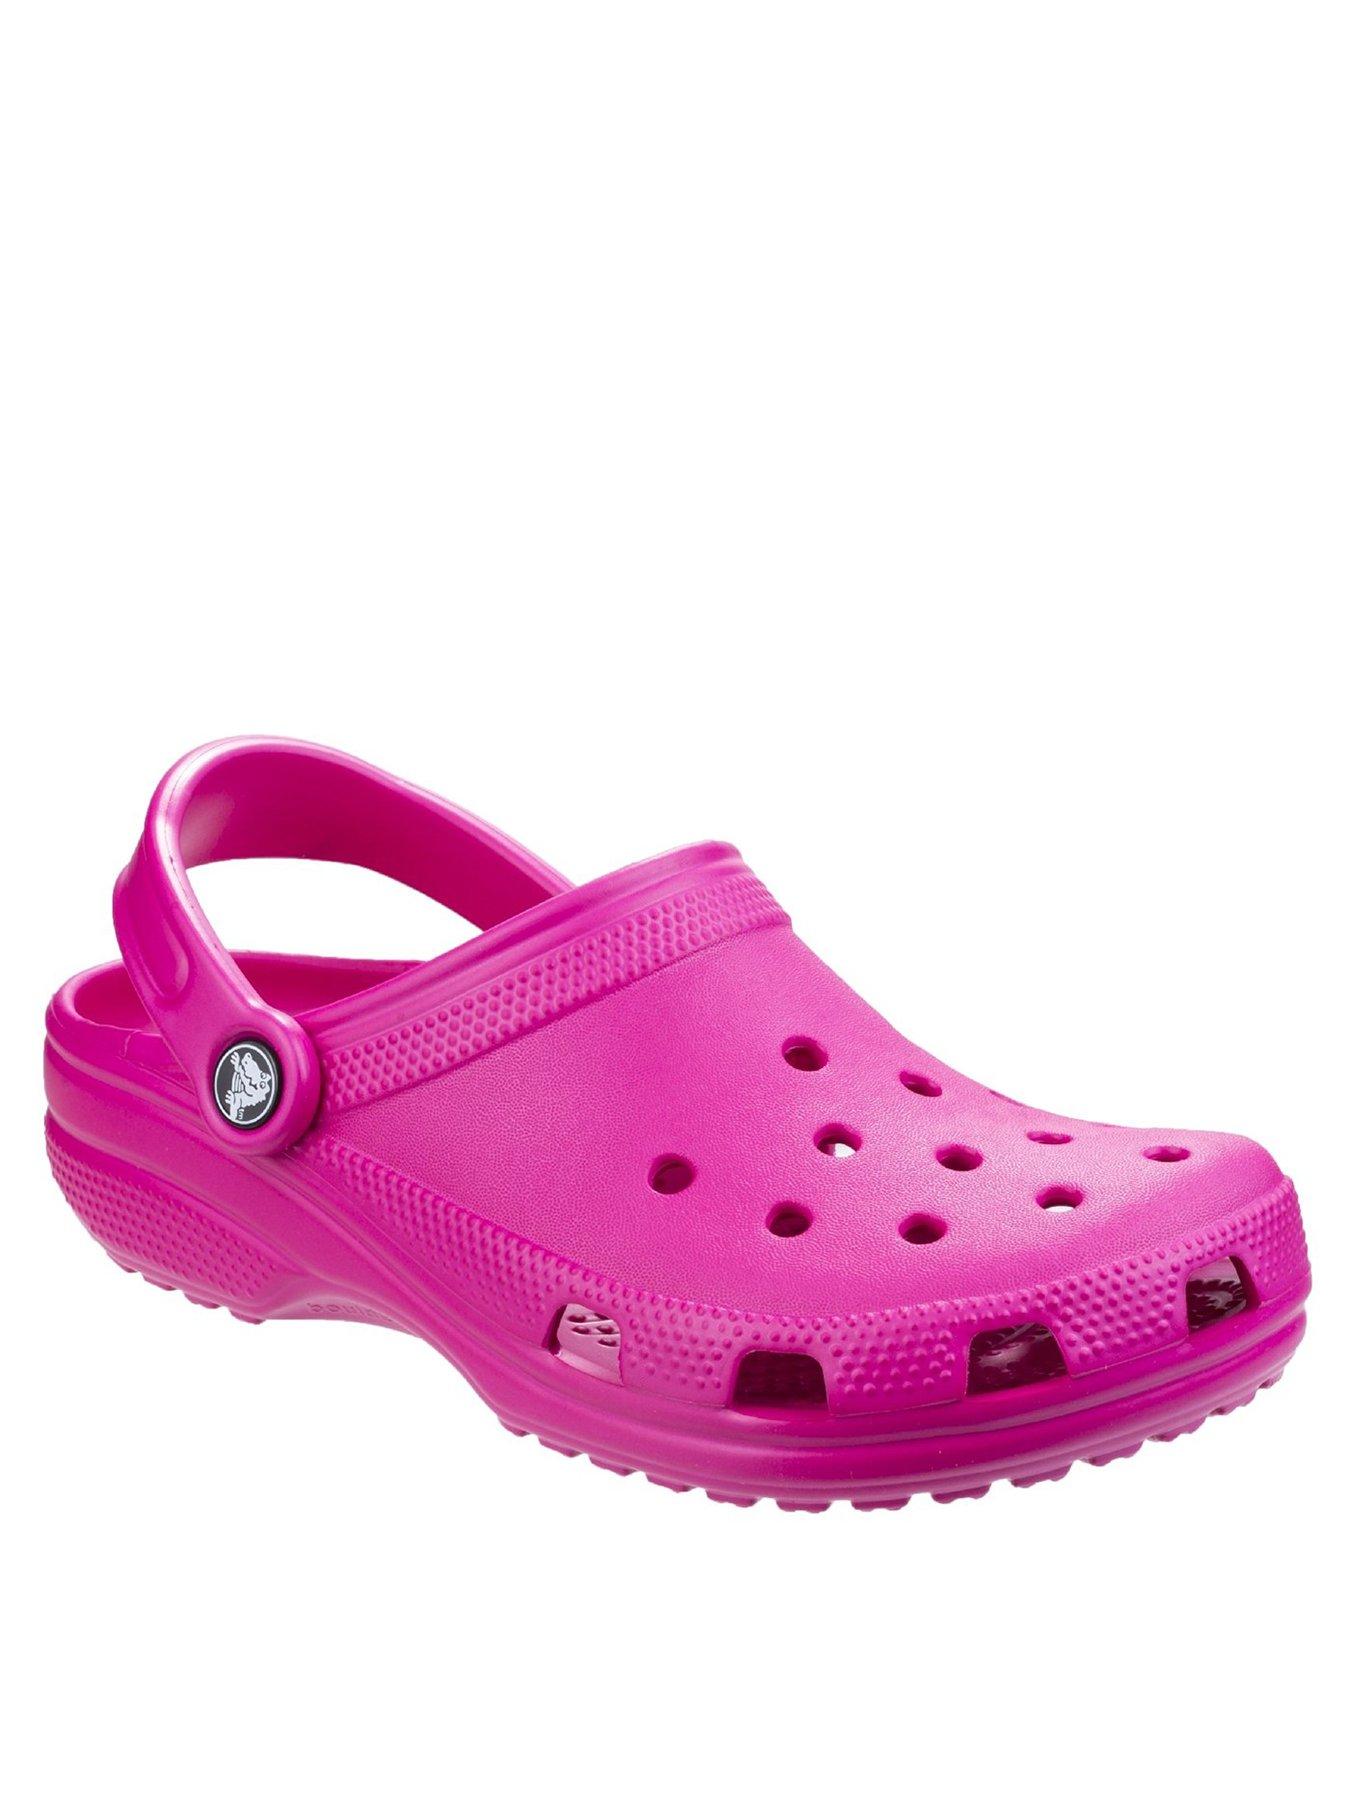 crocs shoes 219